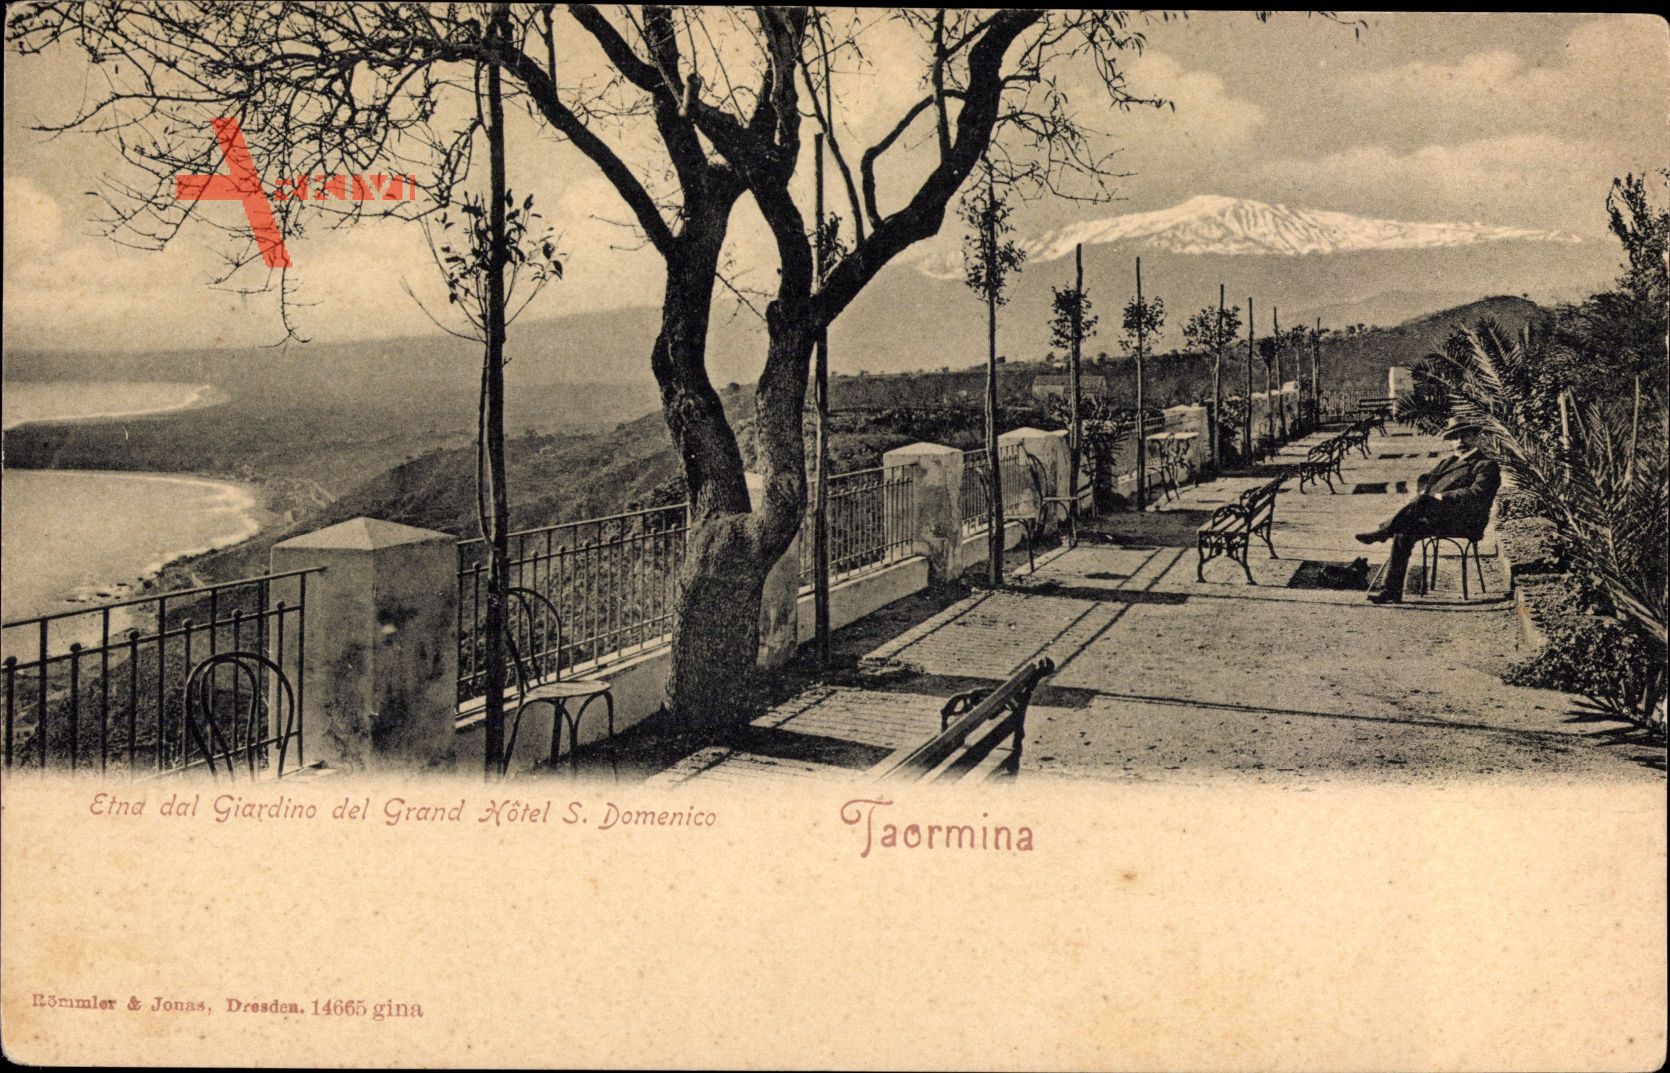 Taormina Sicilia, Etna dal Giardino del Grand Hotel S. Domenico